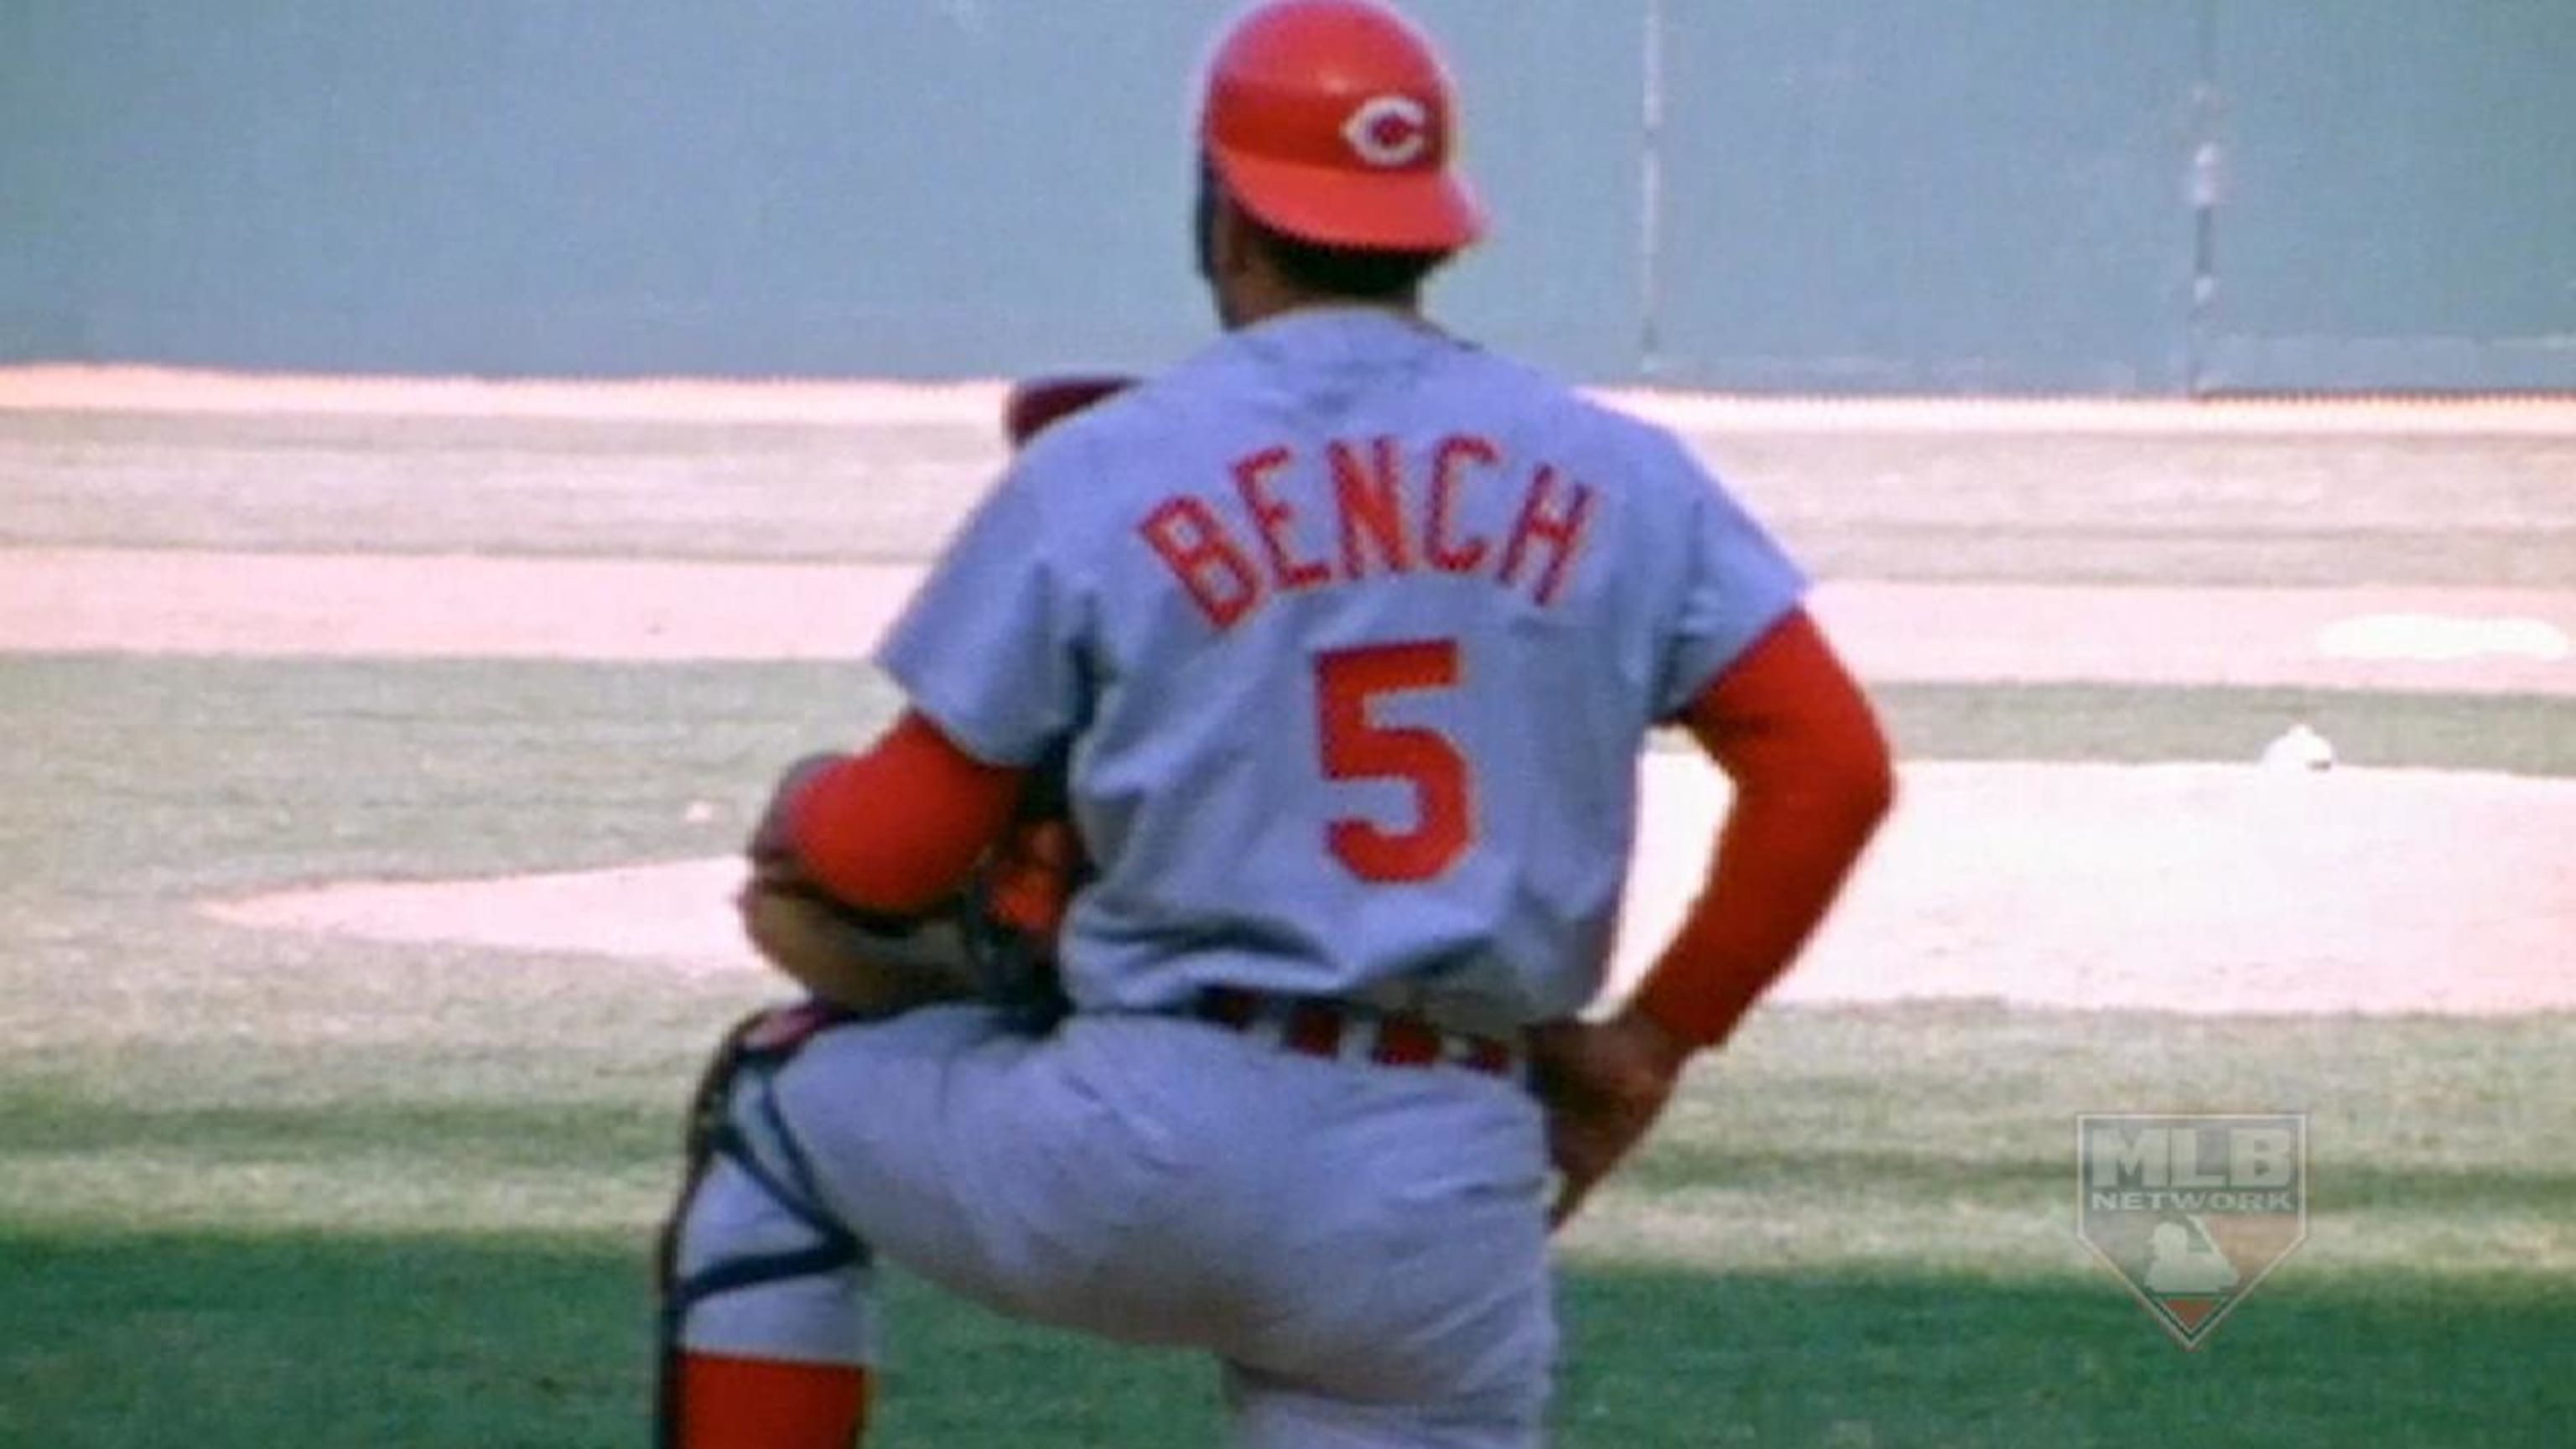 bench baseball player